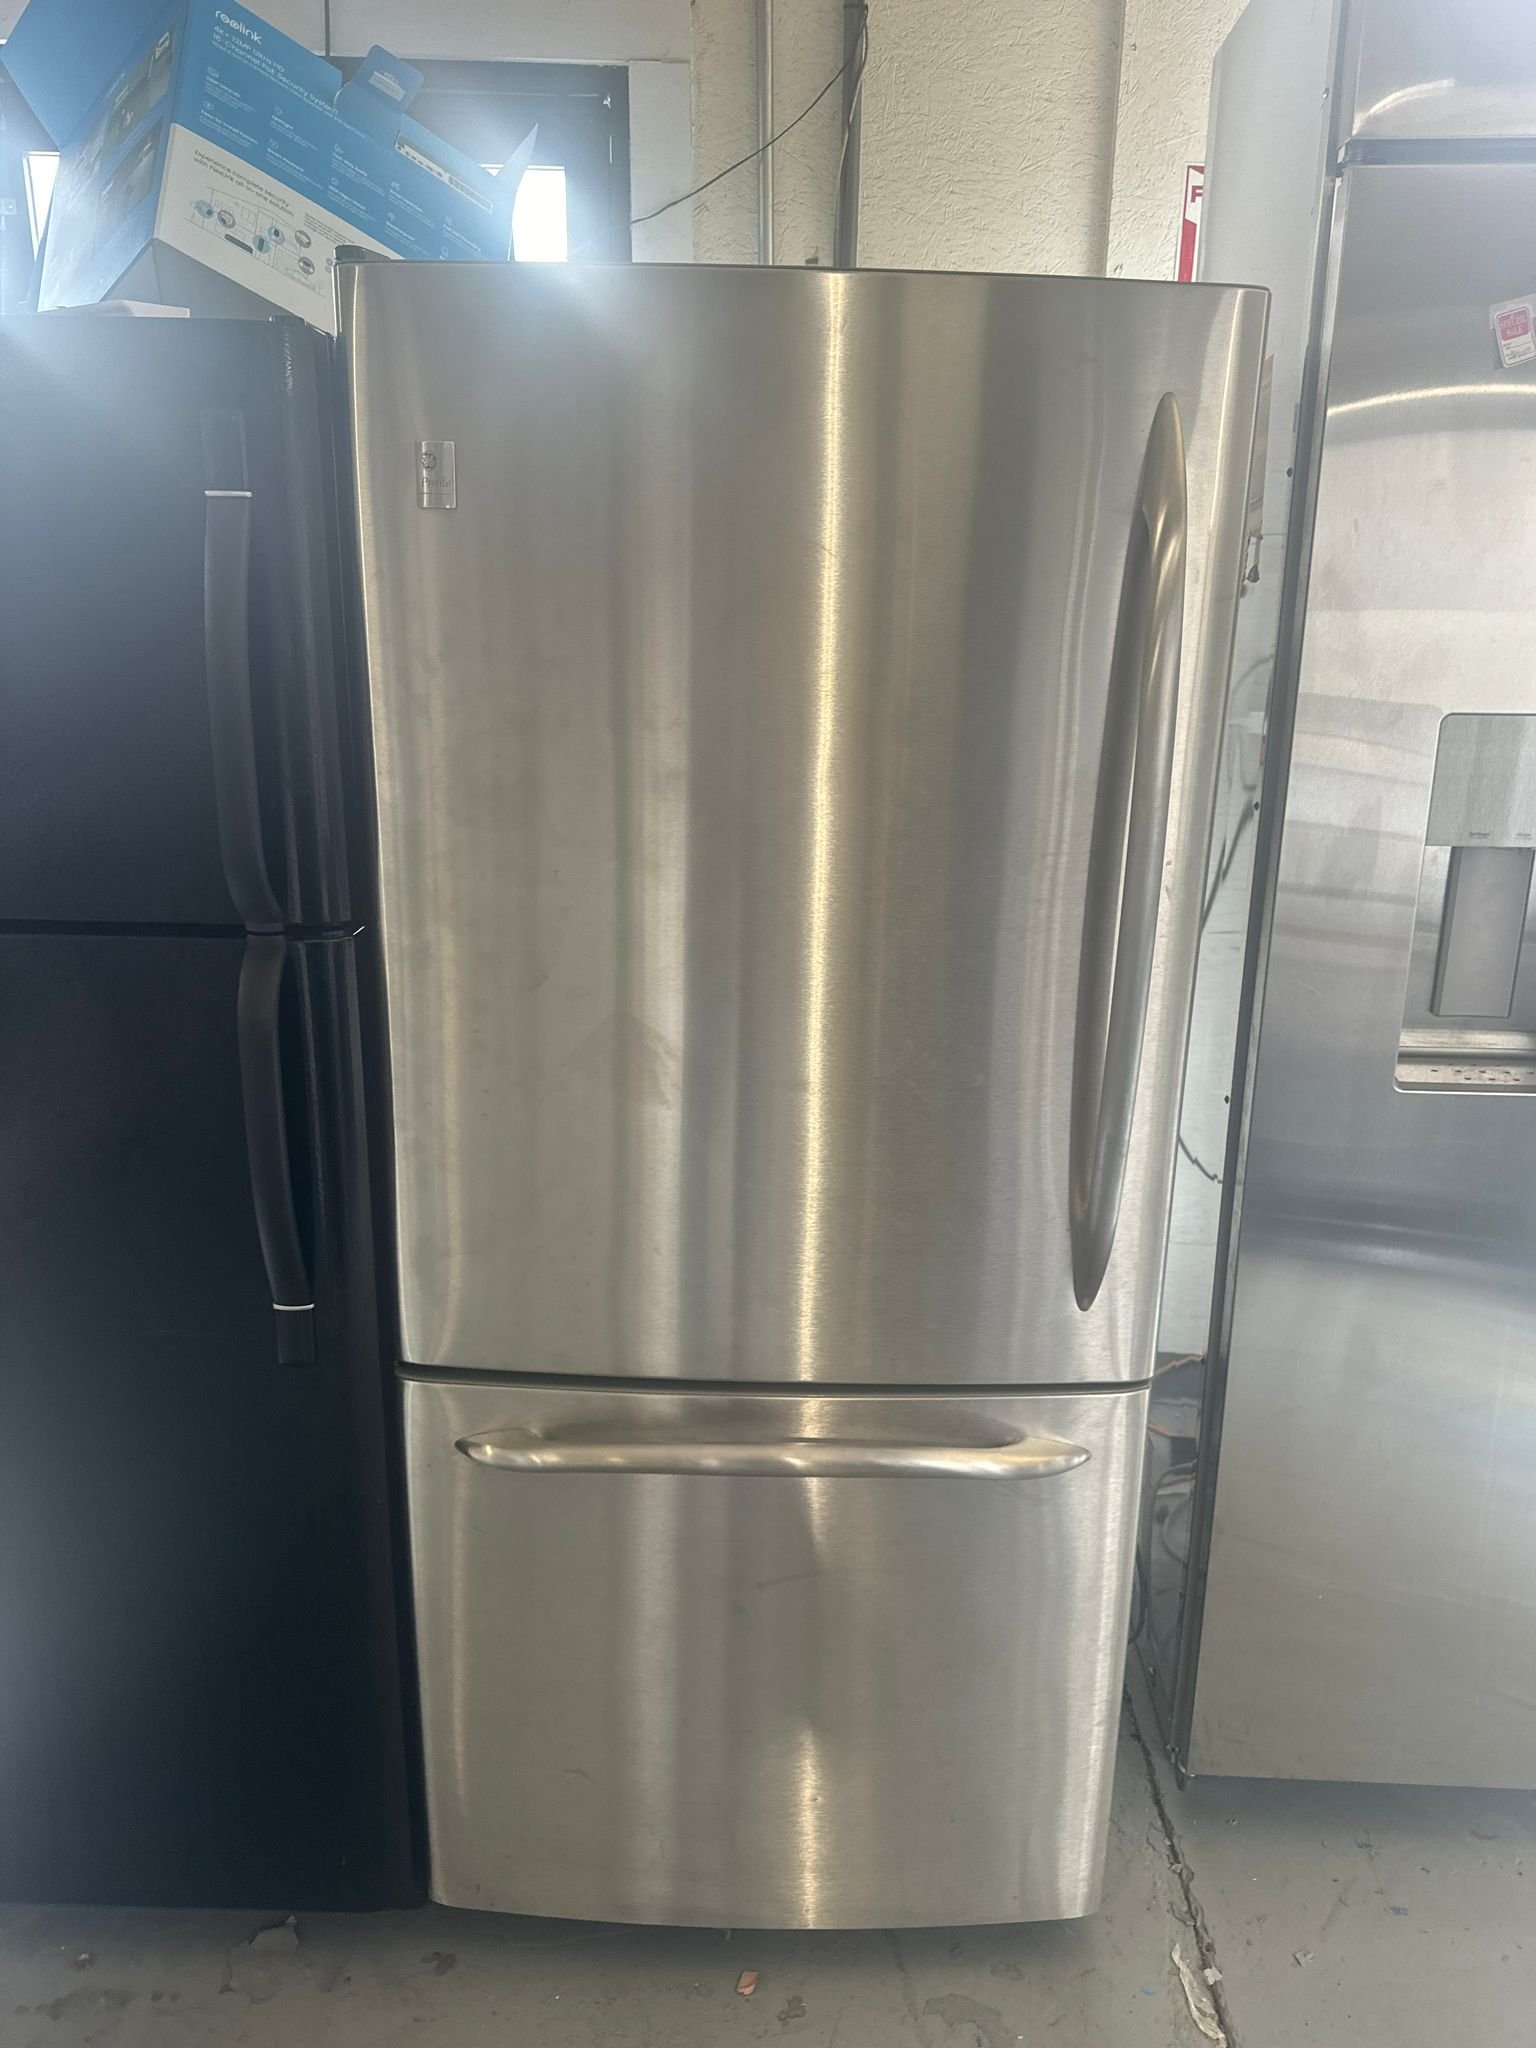 GE Profile Used Bottom Freezer Refrigerator